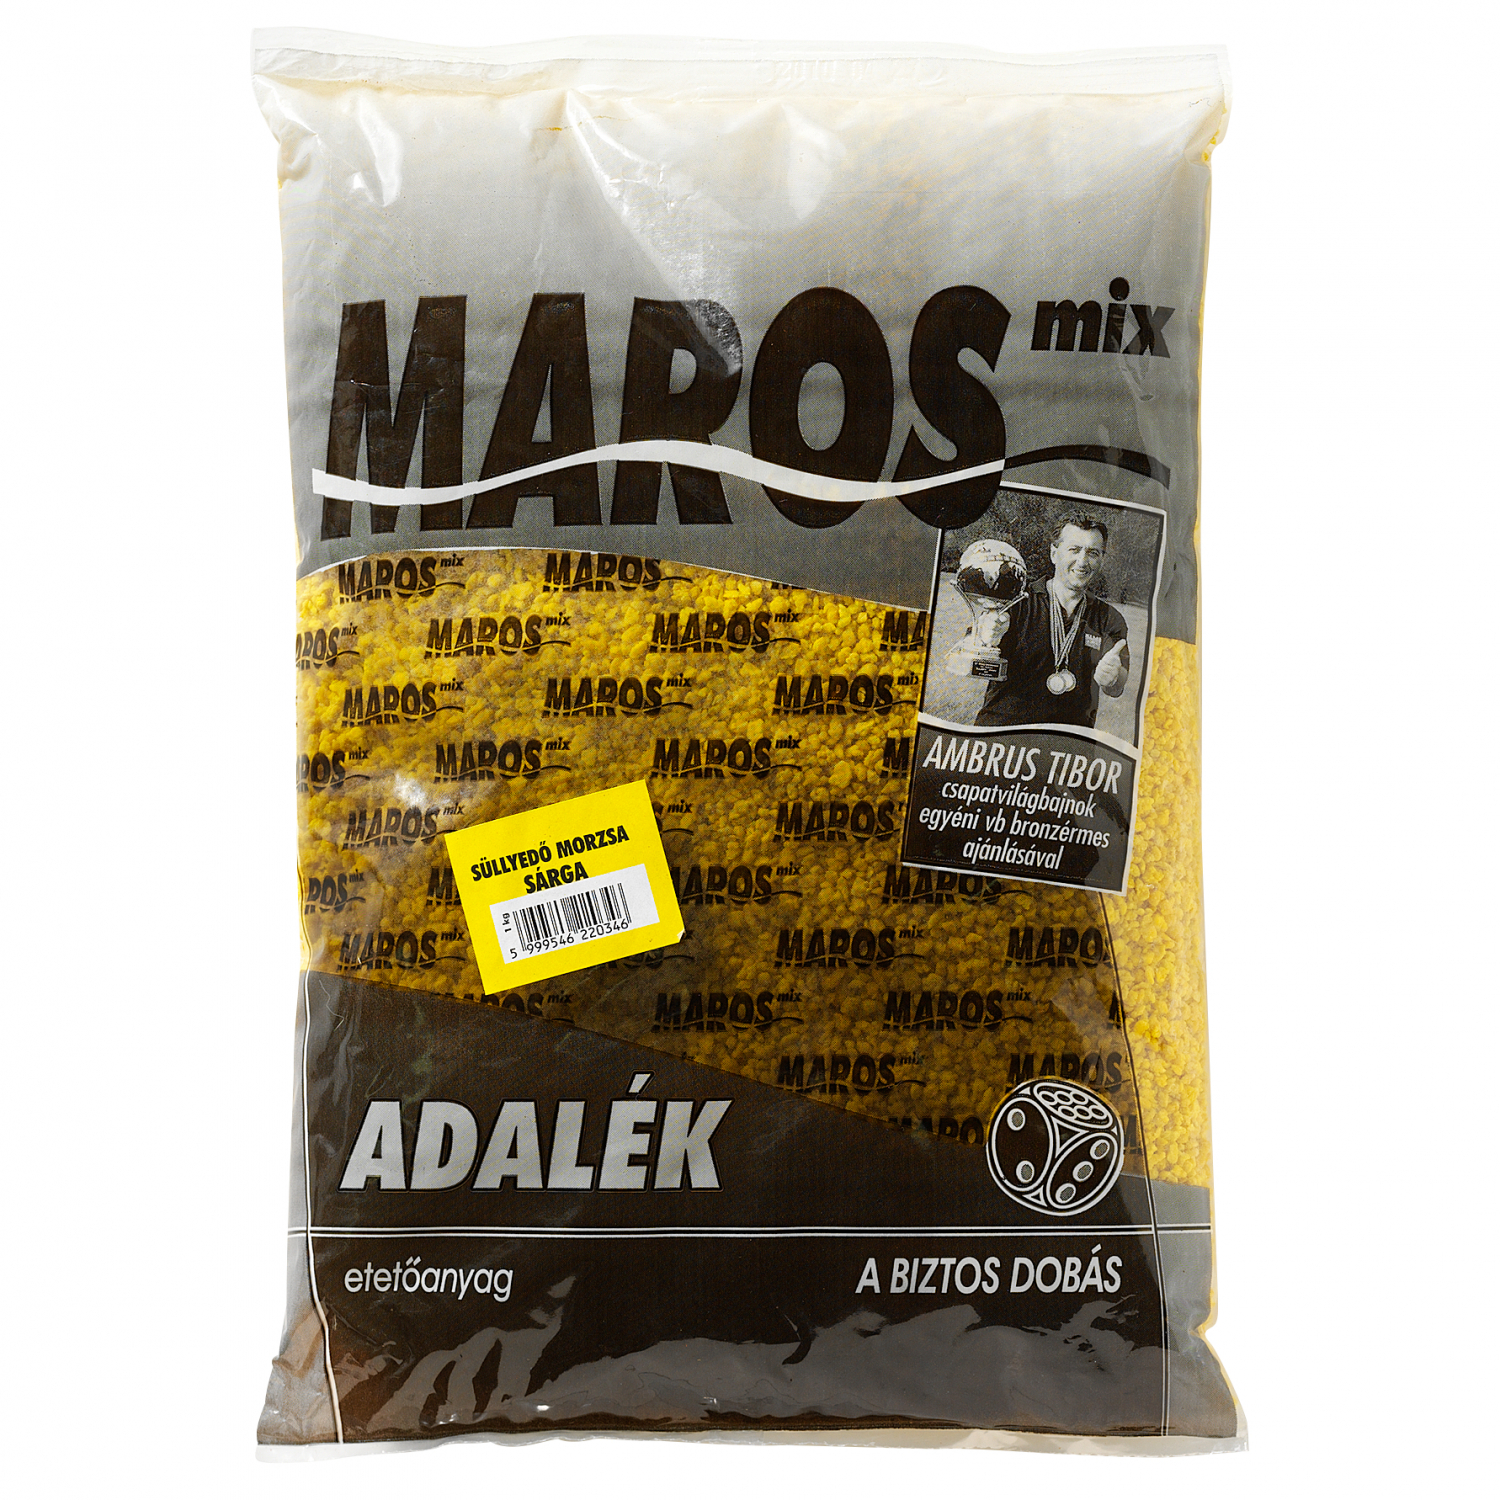 Maros Mix Additives (Yellow Crumbs) 